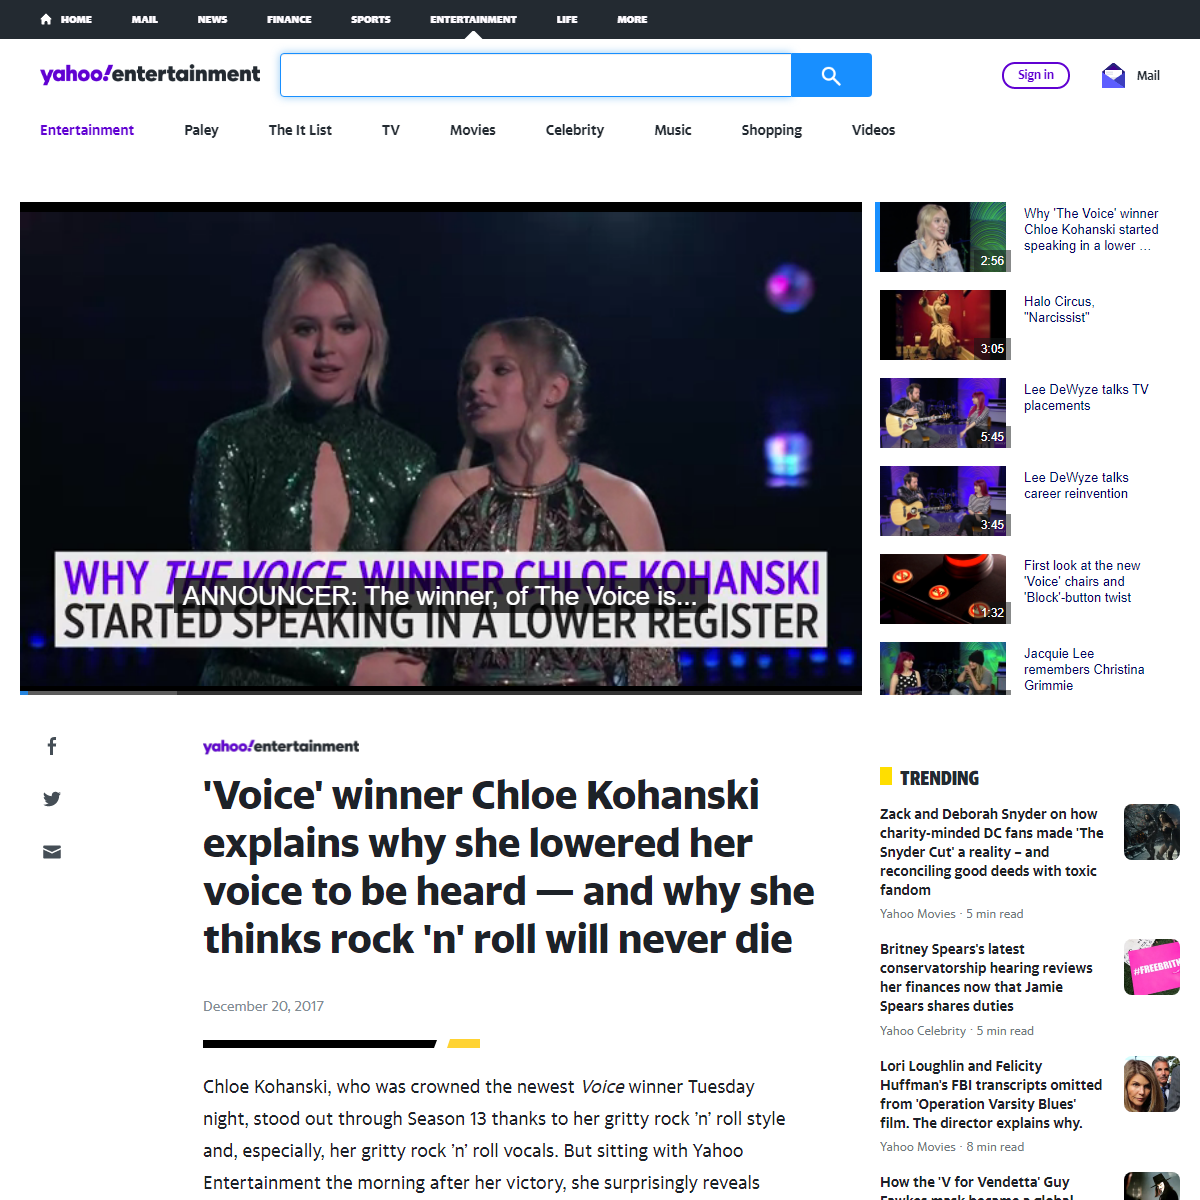 A complete backup of https://www.yahoo.com/entertainment/voice-winner-chloe-kohanski-explains-lowered-voice-heard-thinks-rock-n-